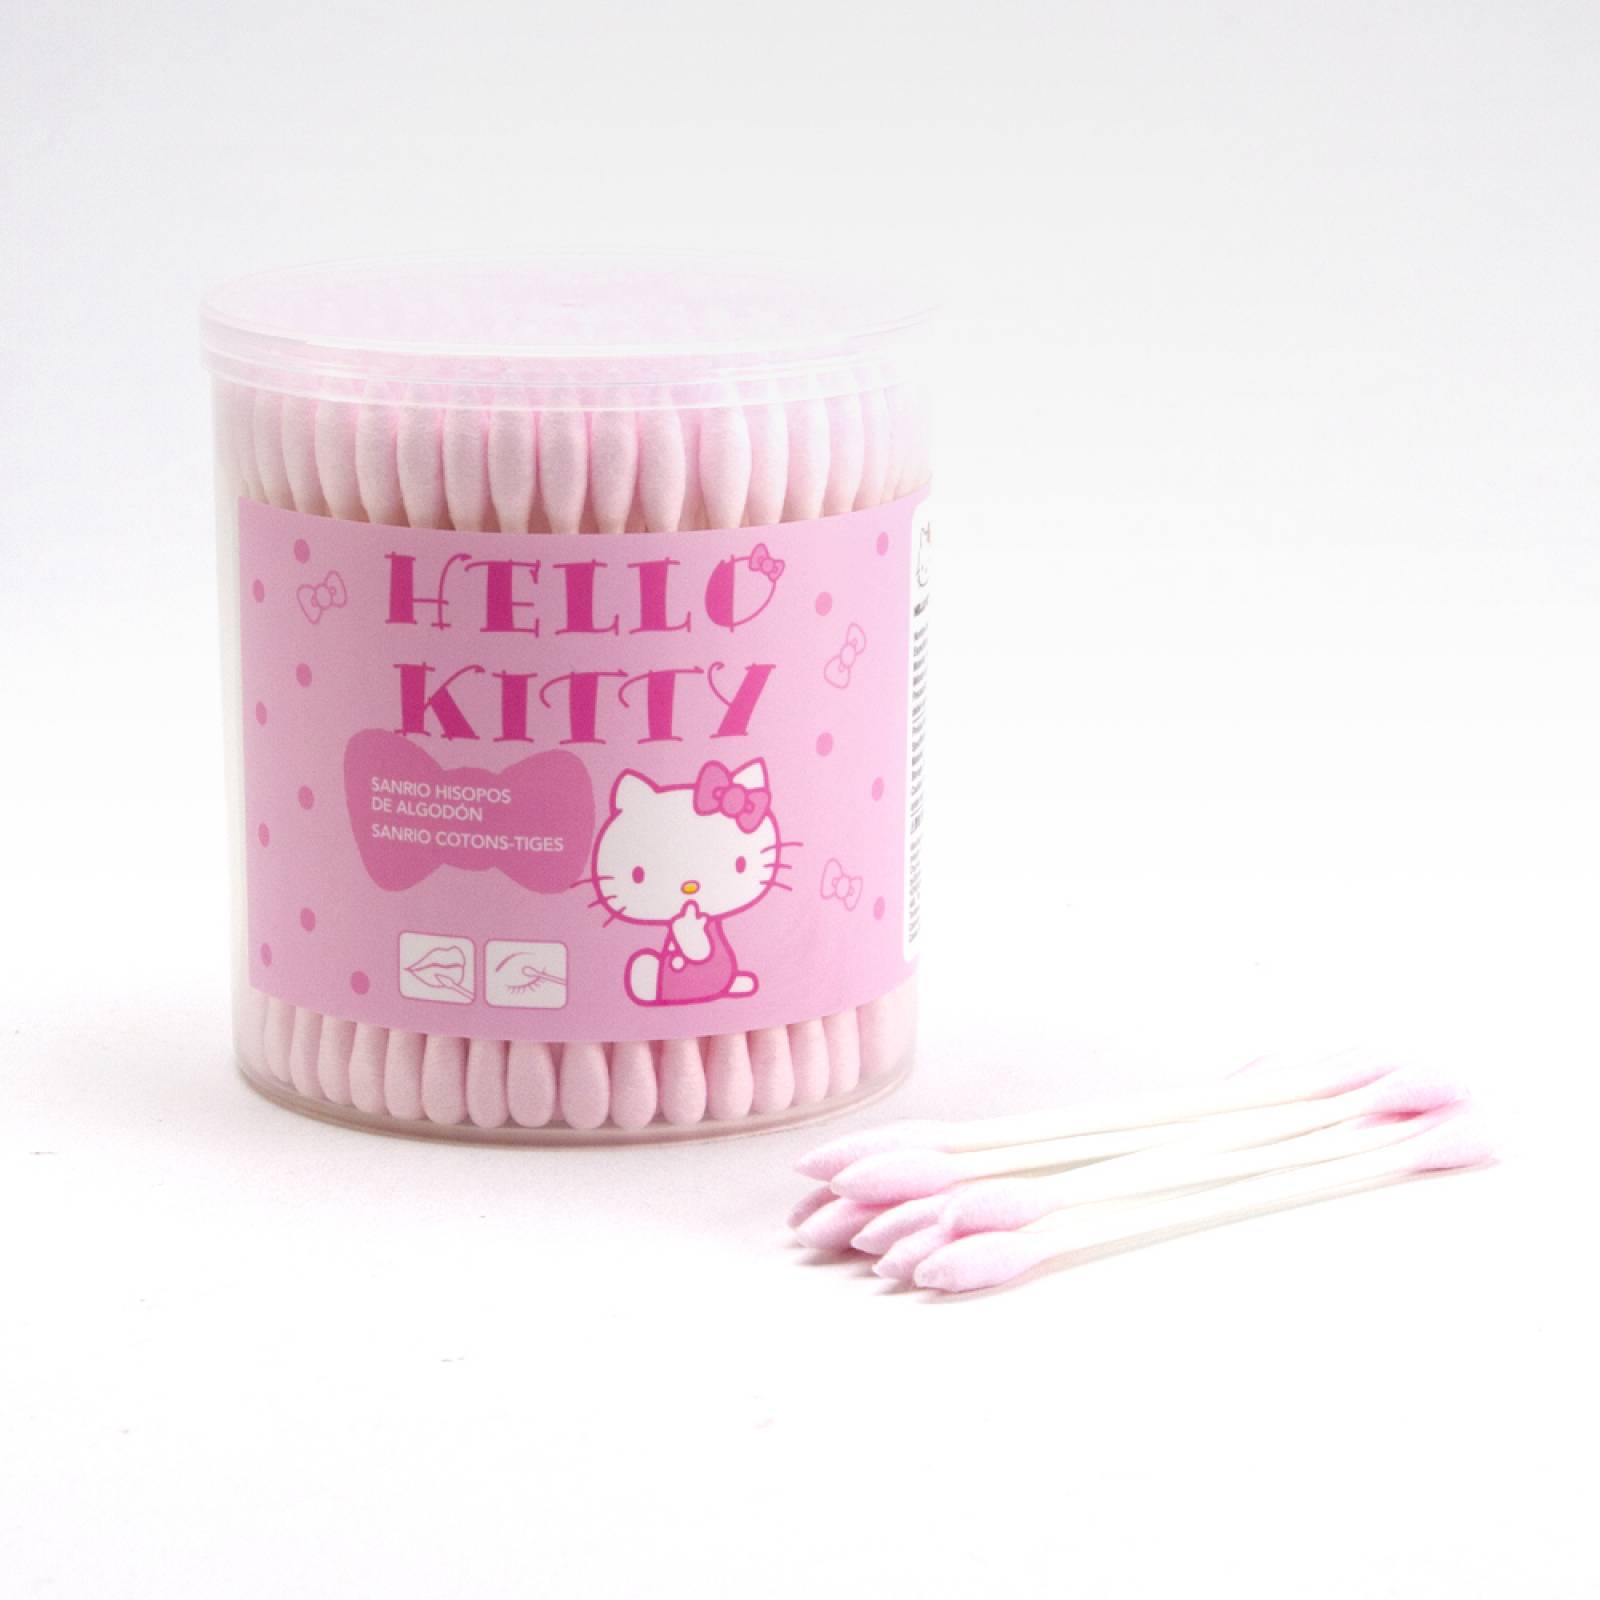 Paquete de hisopos de algodón  Hello Kitty  Rosa  Chicos